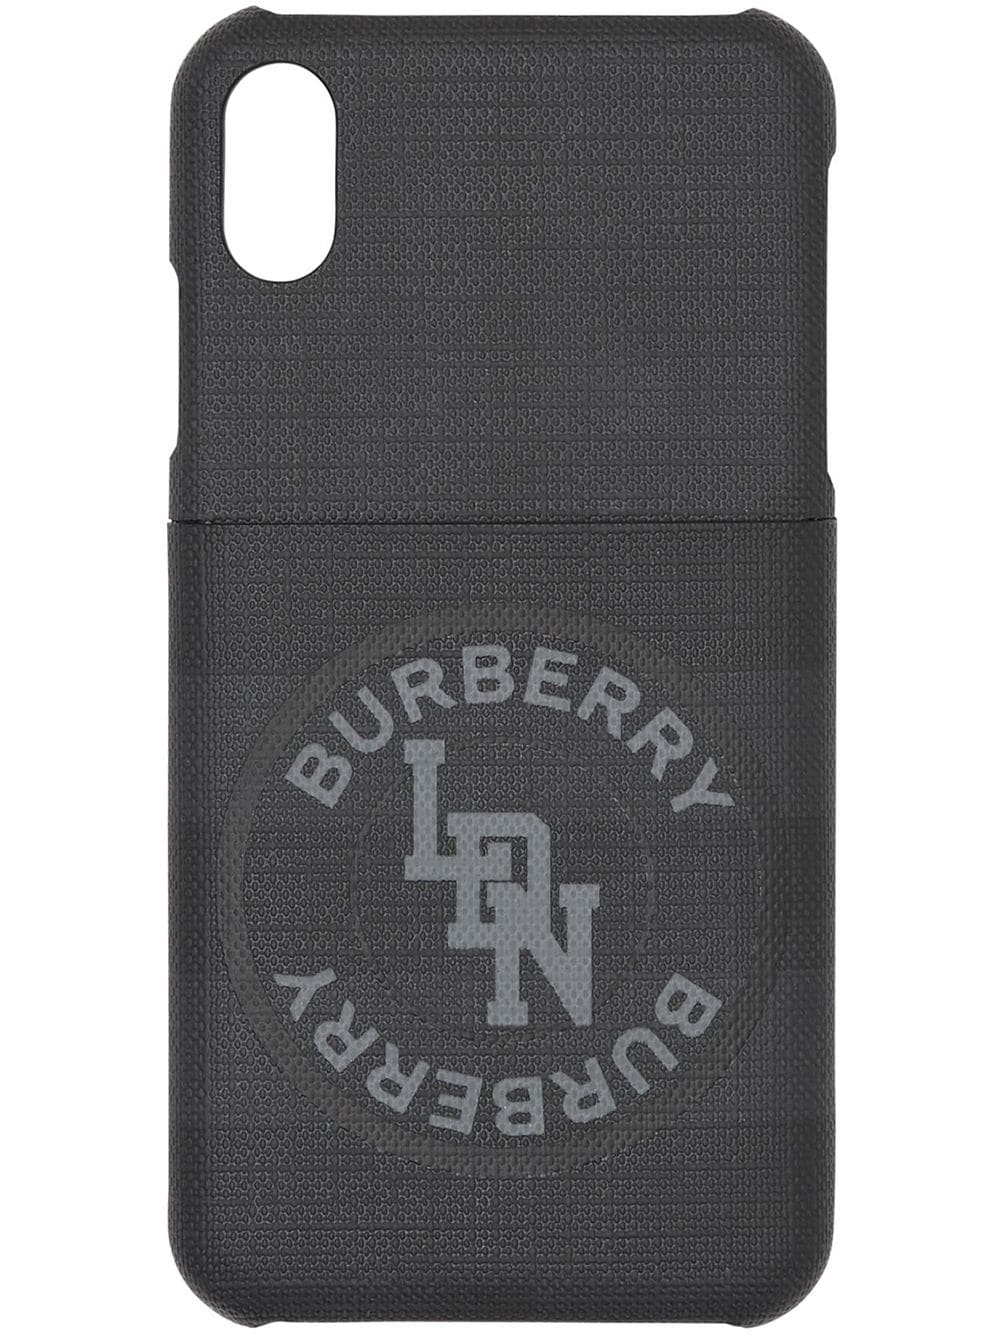 фото Burberry чехол для iPhone X/XS с логотипом